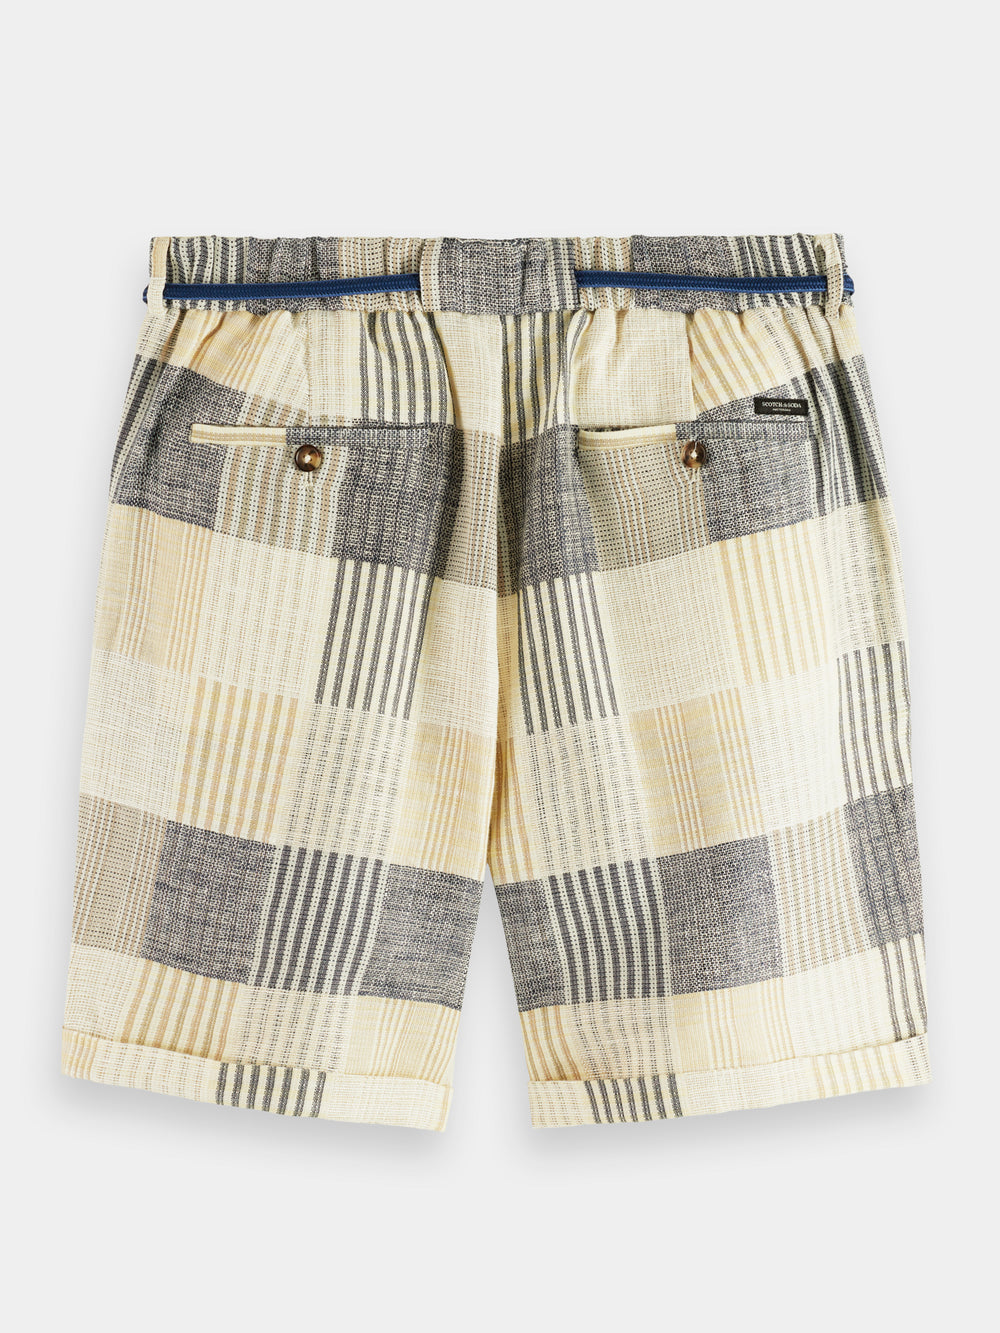 Twilt linen blend jacquard check pleated shorts - Scotch & Soda NZ